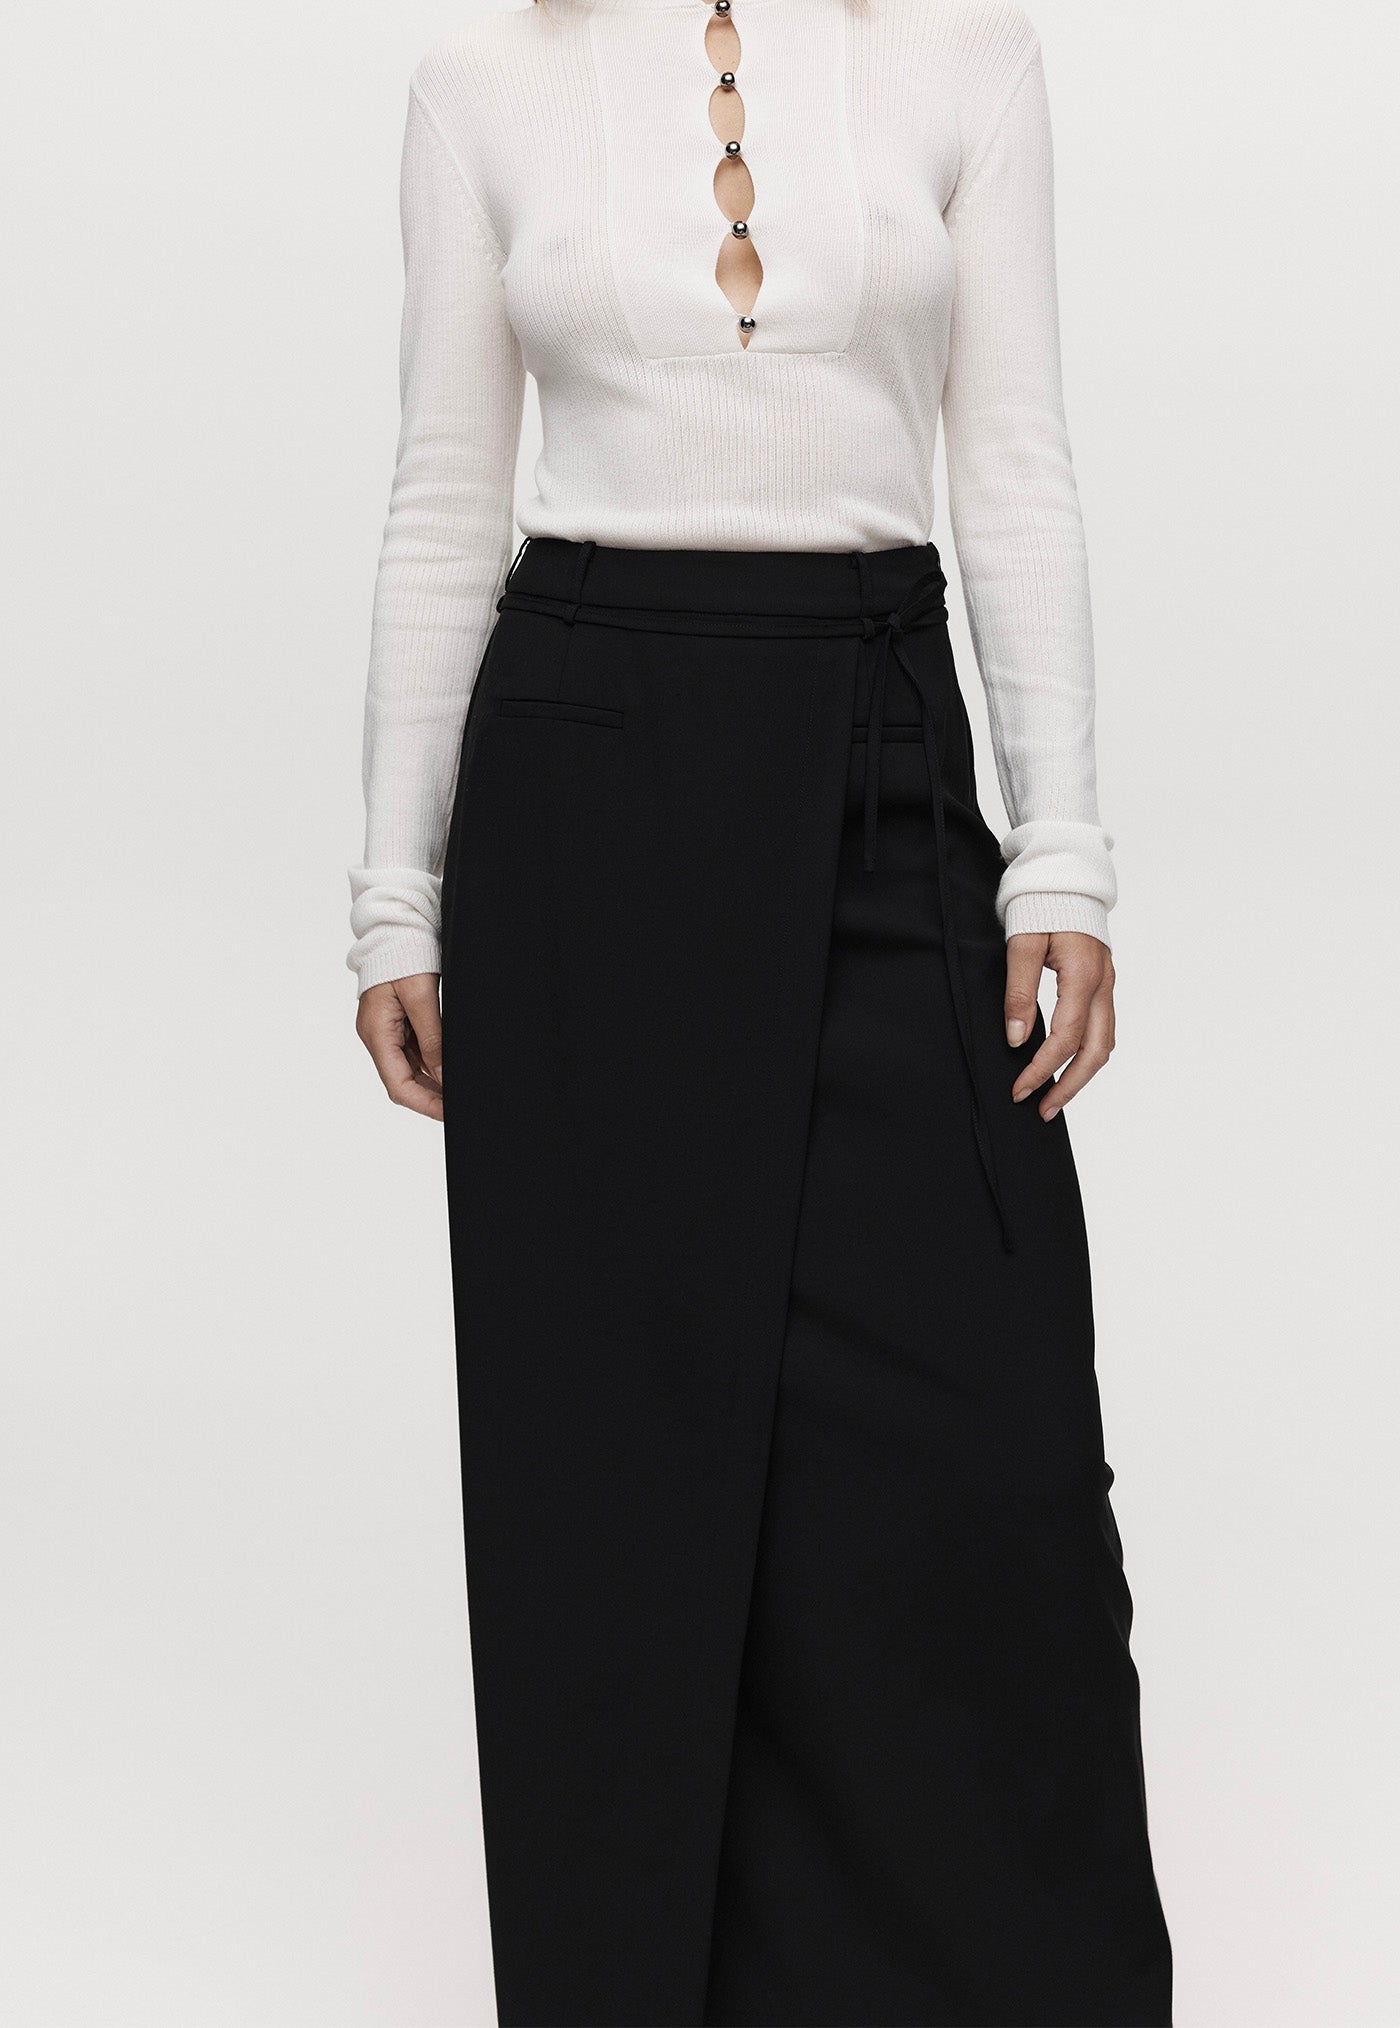 Carmella Skirt - Black sold by Angel Divine